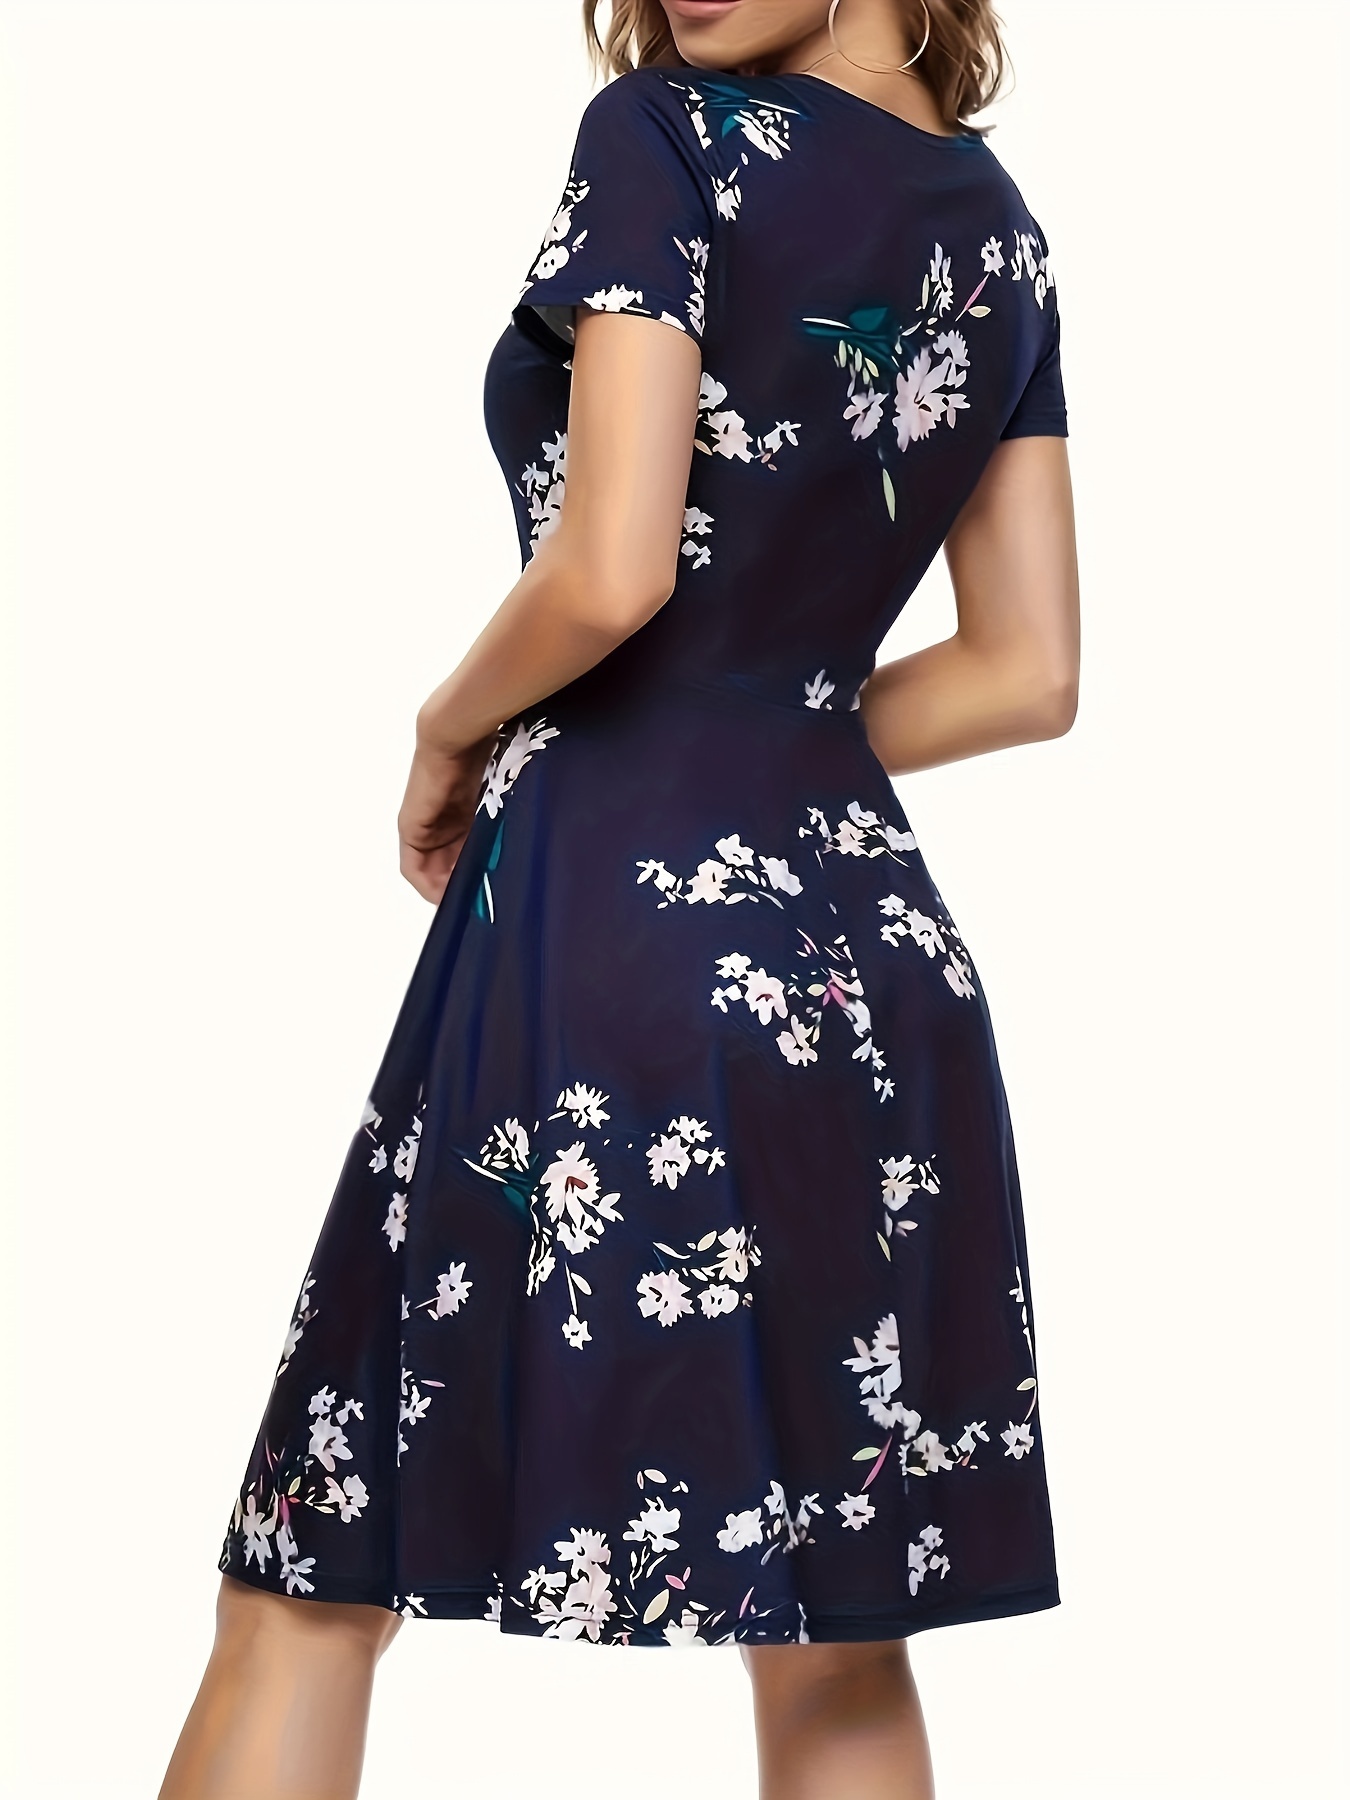 floral print crew neck dress elegant short sleeve dress for spring summer womens clothing